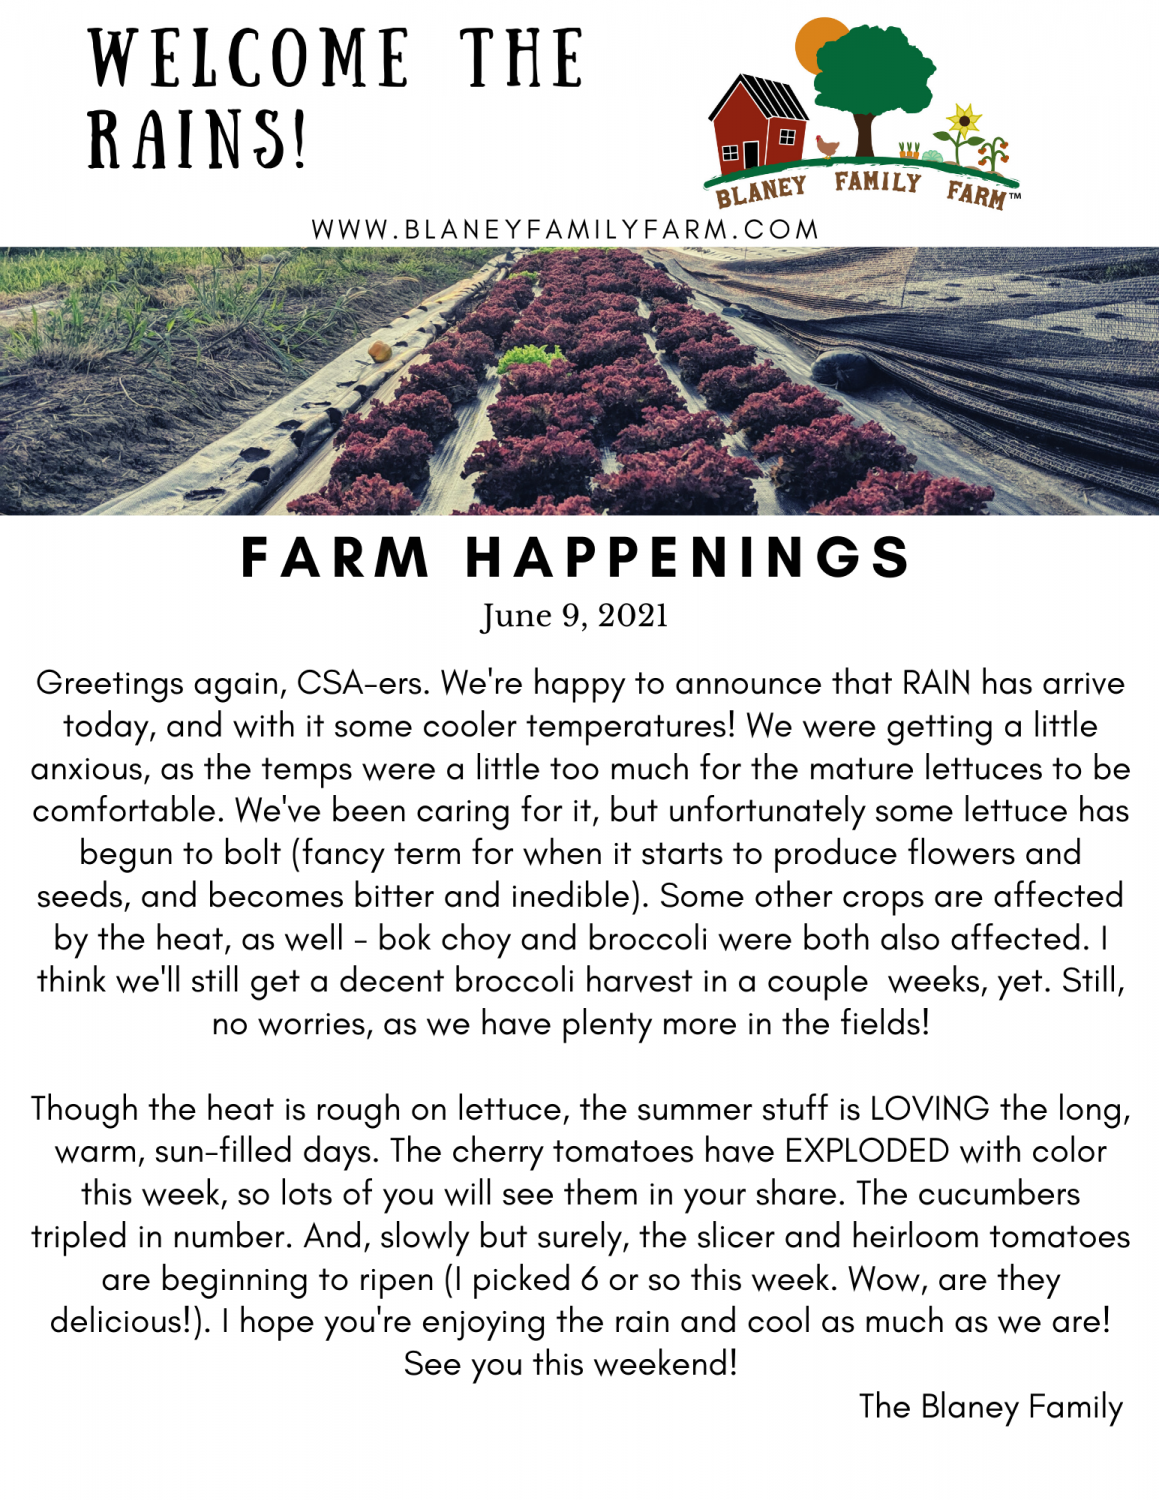 Farm Happenings for June 11, 2021